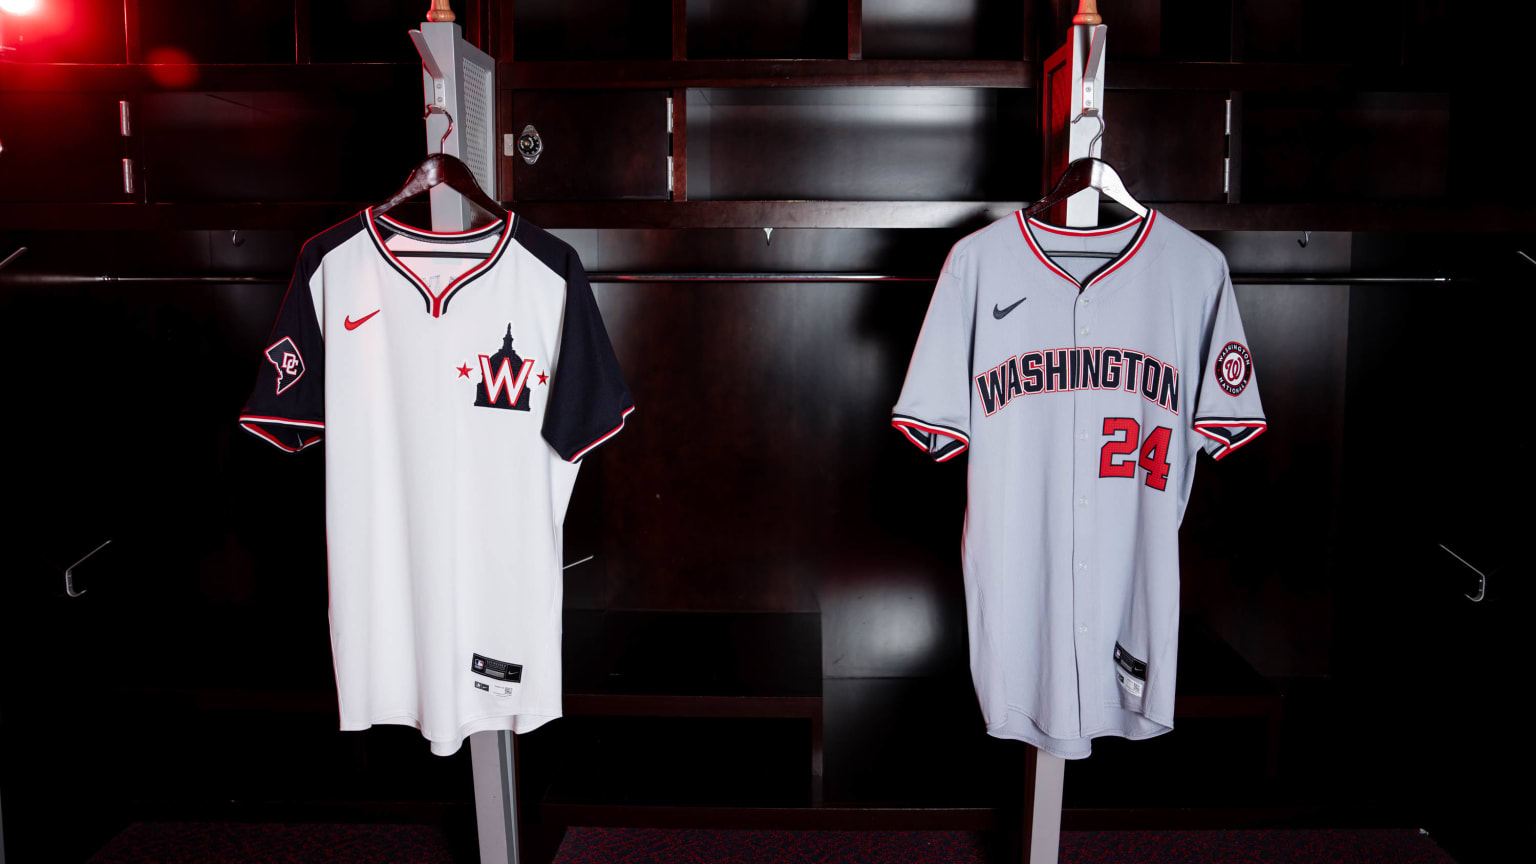 Two new Washington Nationals jerseys